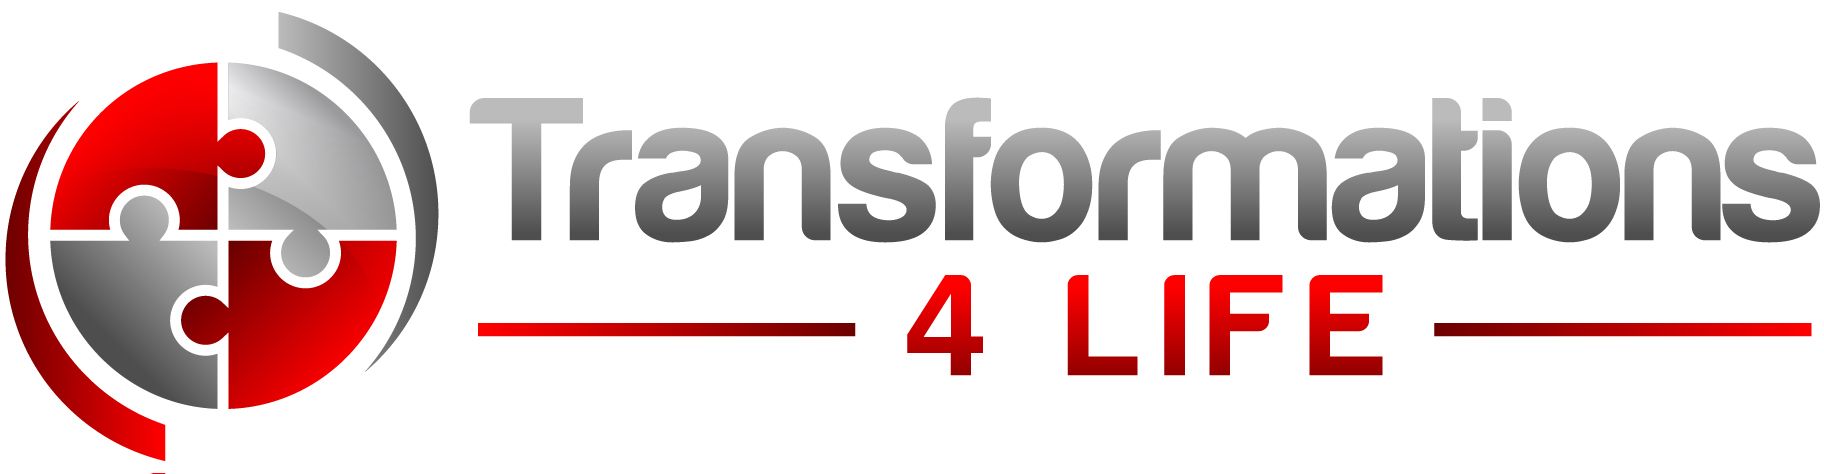 Transformations 4 Life Logo